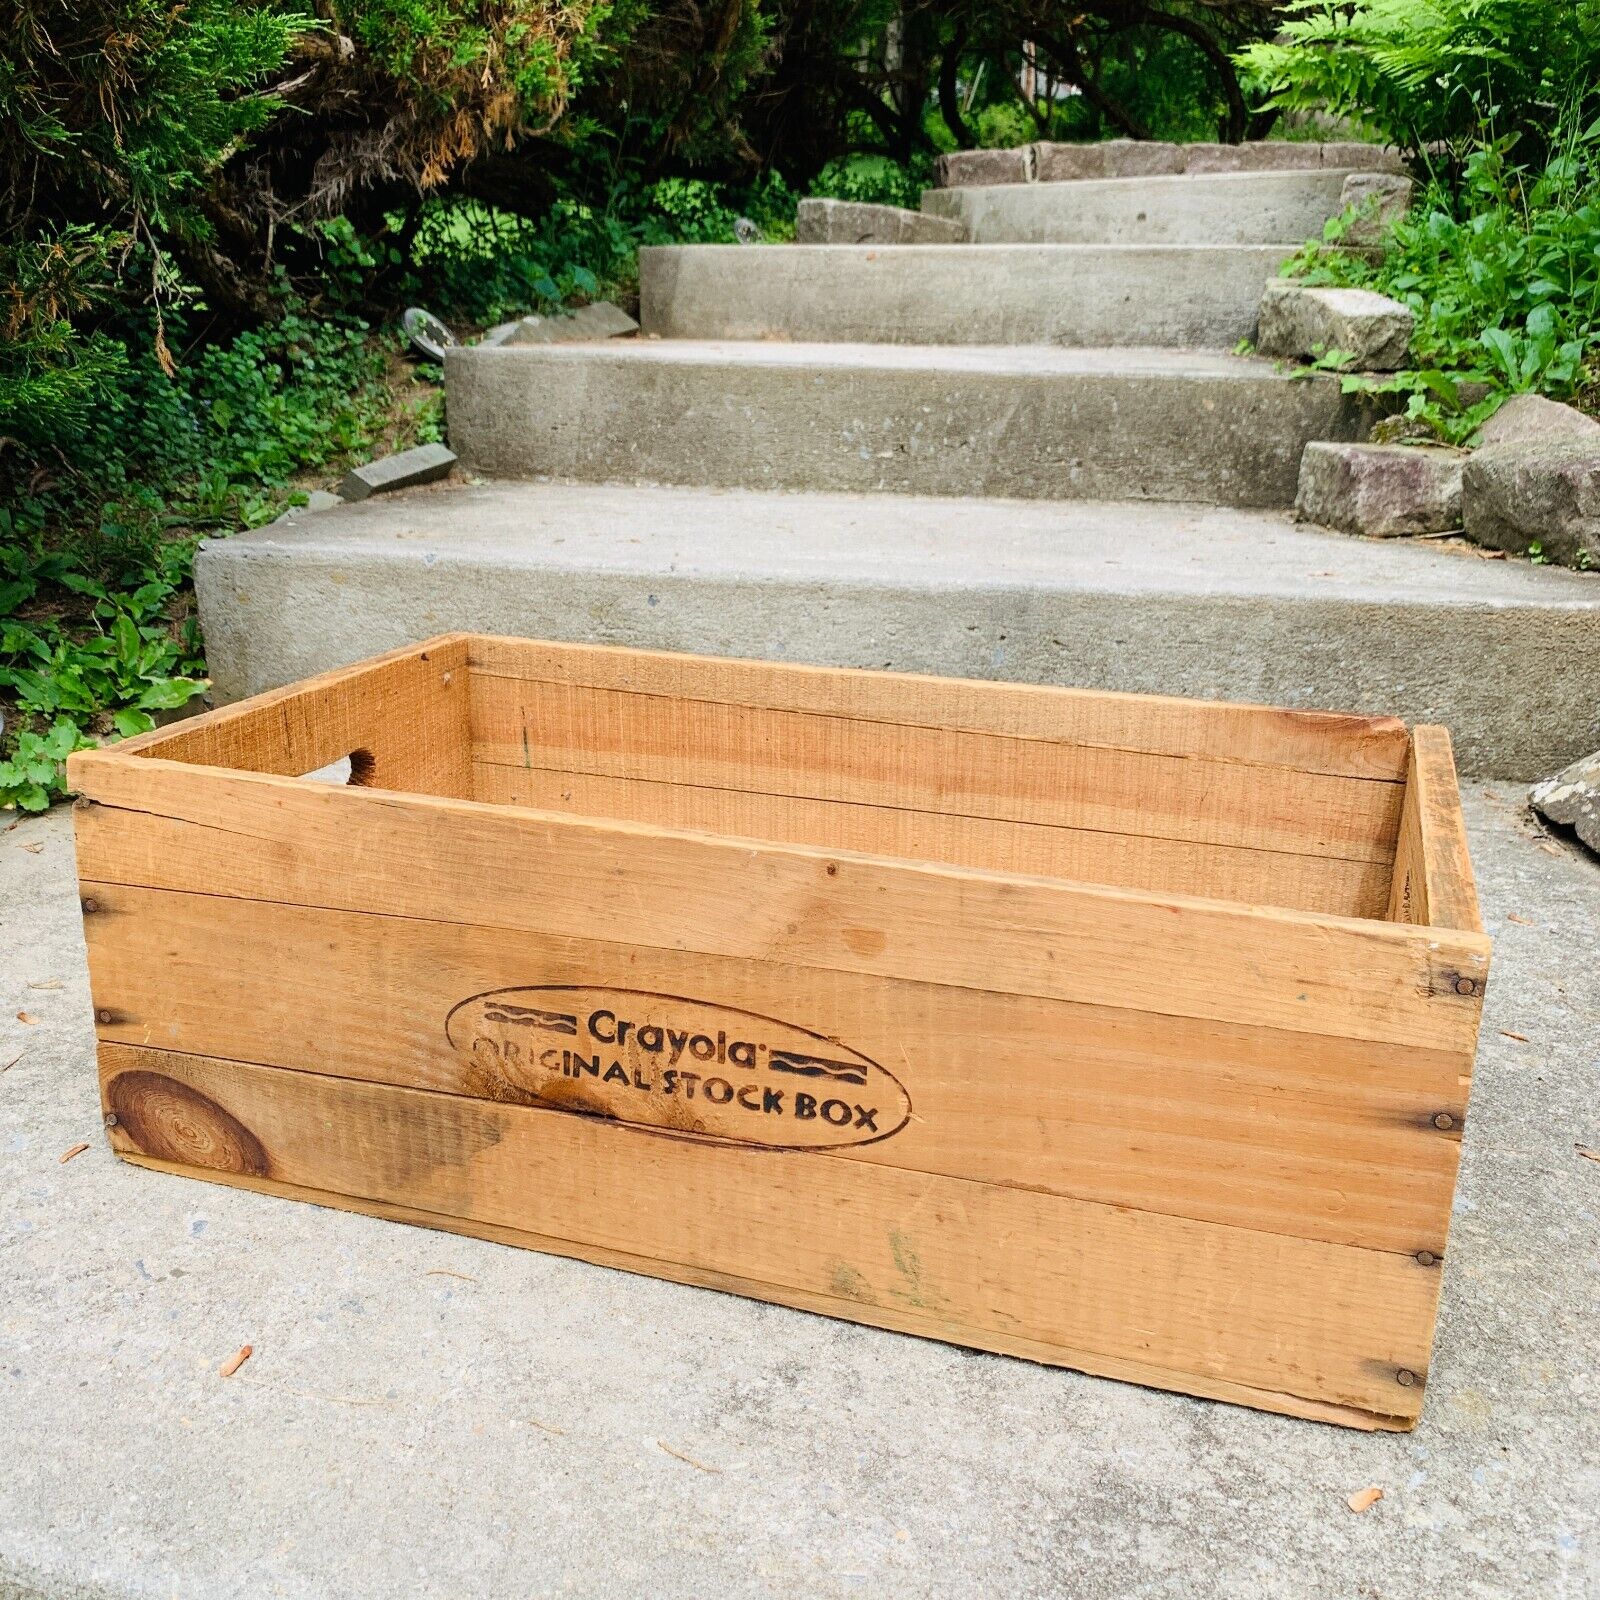 CRAYOLA CRAYONS Vintage Genuine Authentic ORIGINAL STOCK BOX Large Wooden Crate